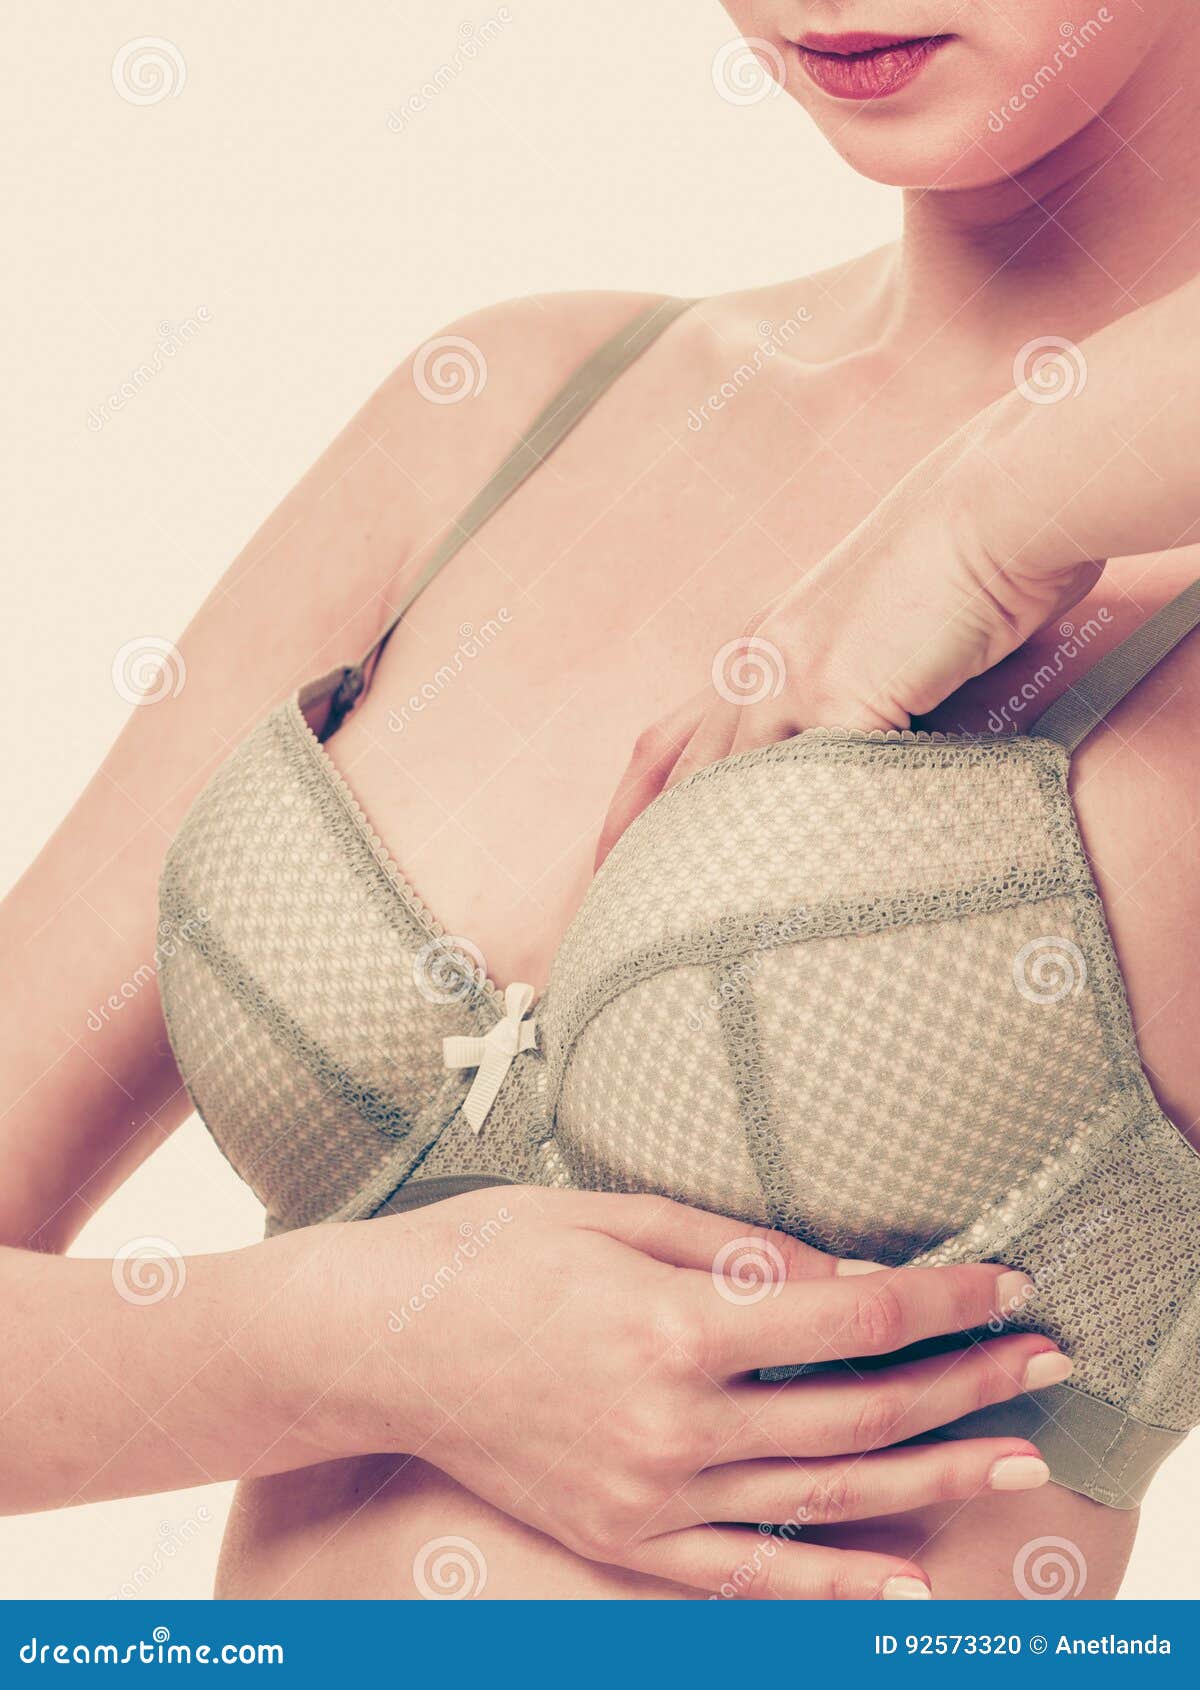 Woman Chest in Underwear Bra Lingerie Stock Photo